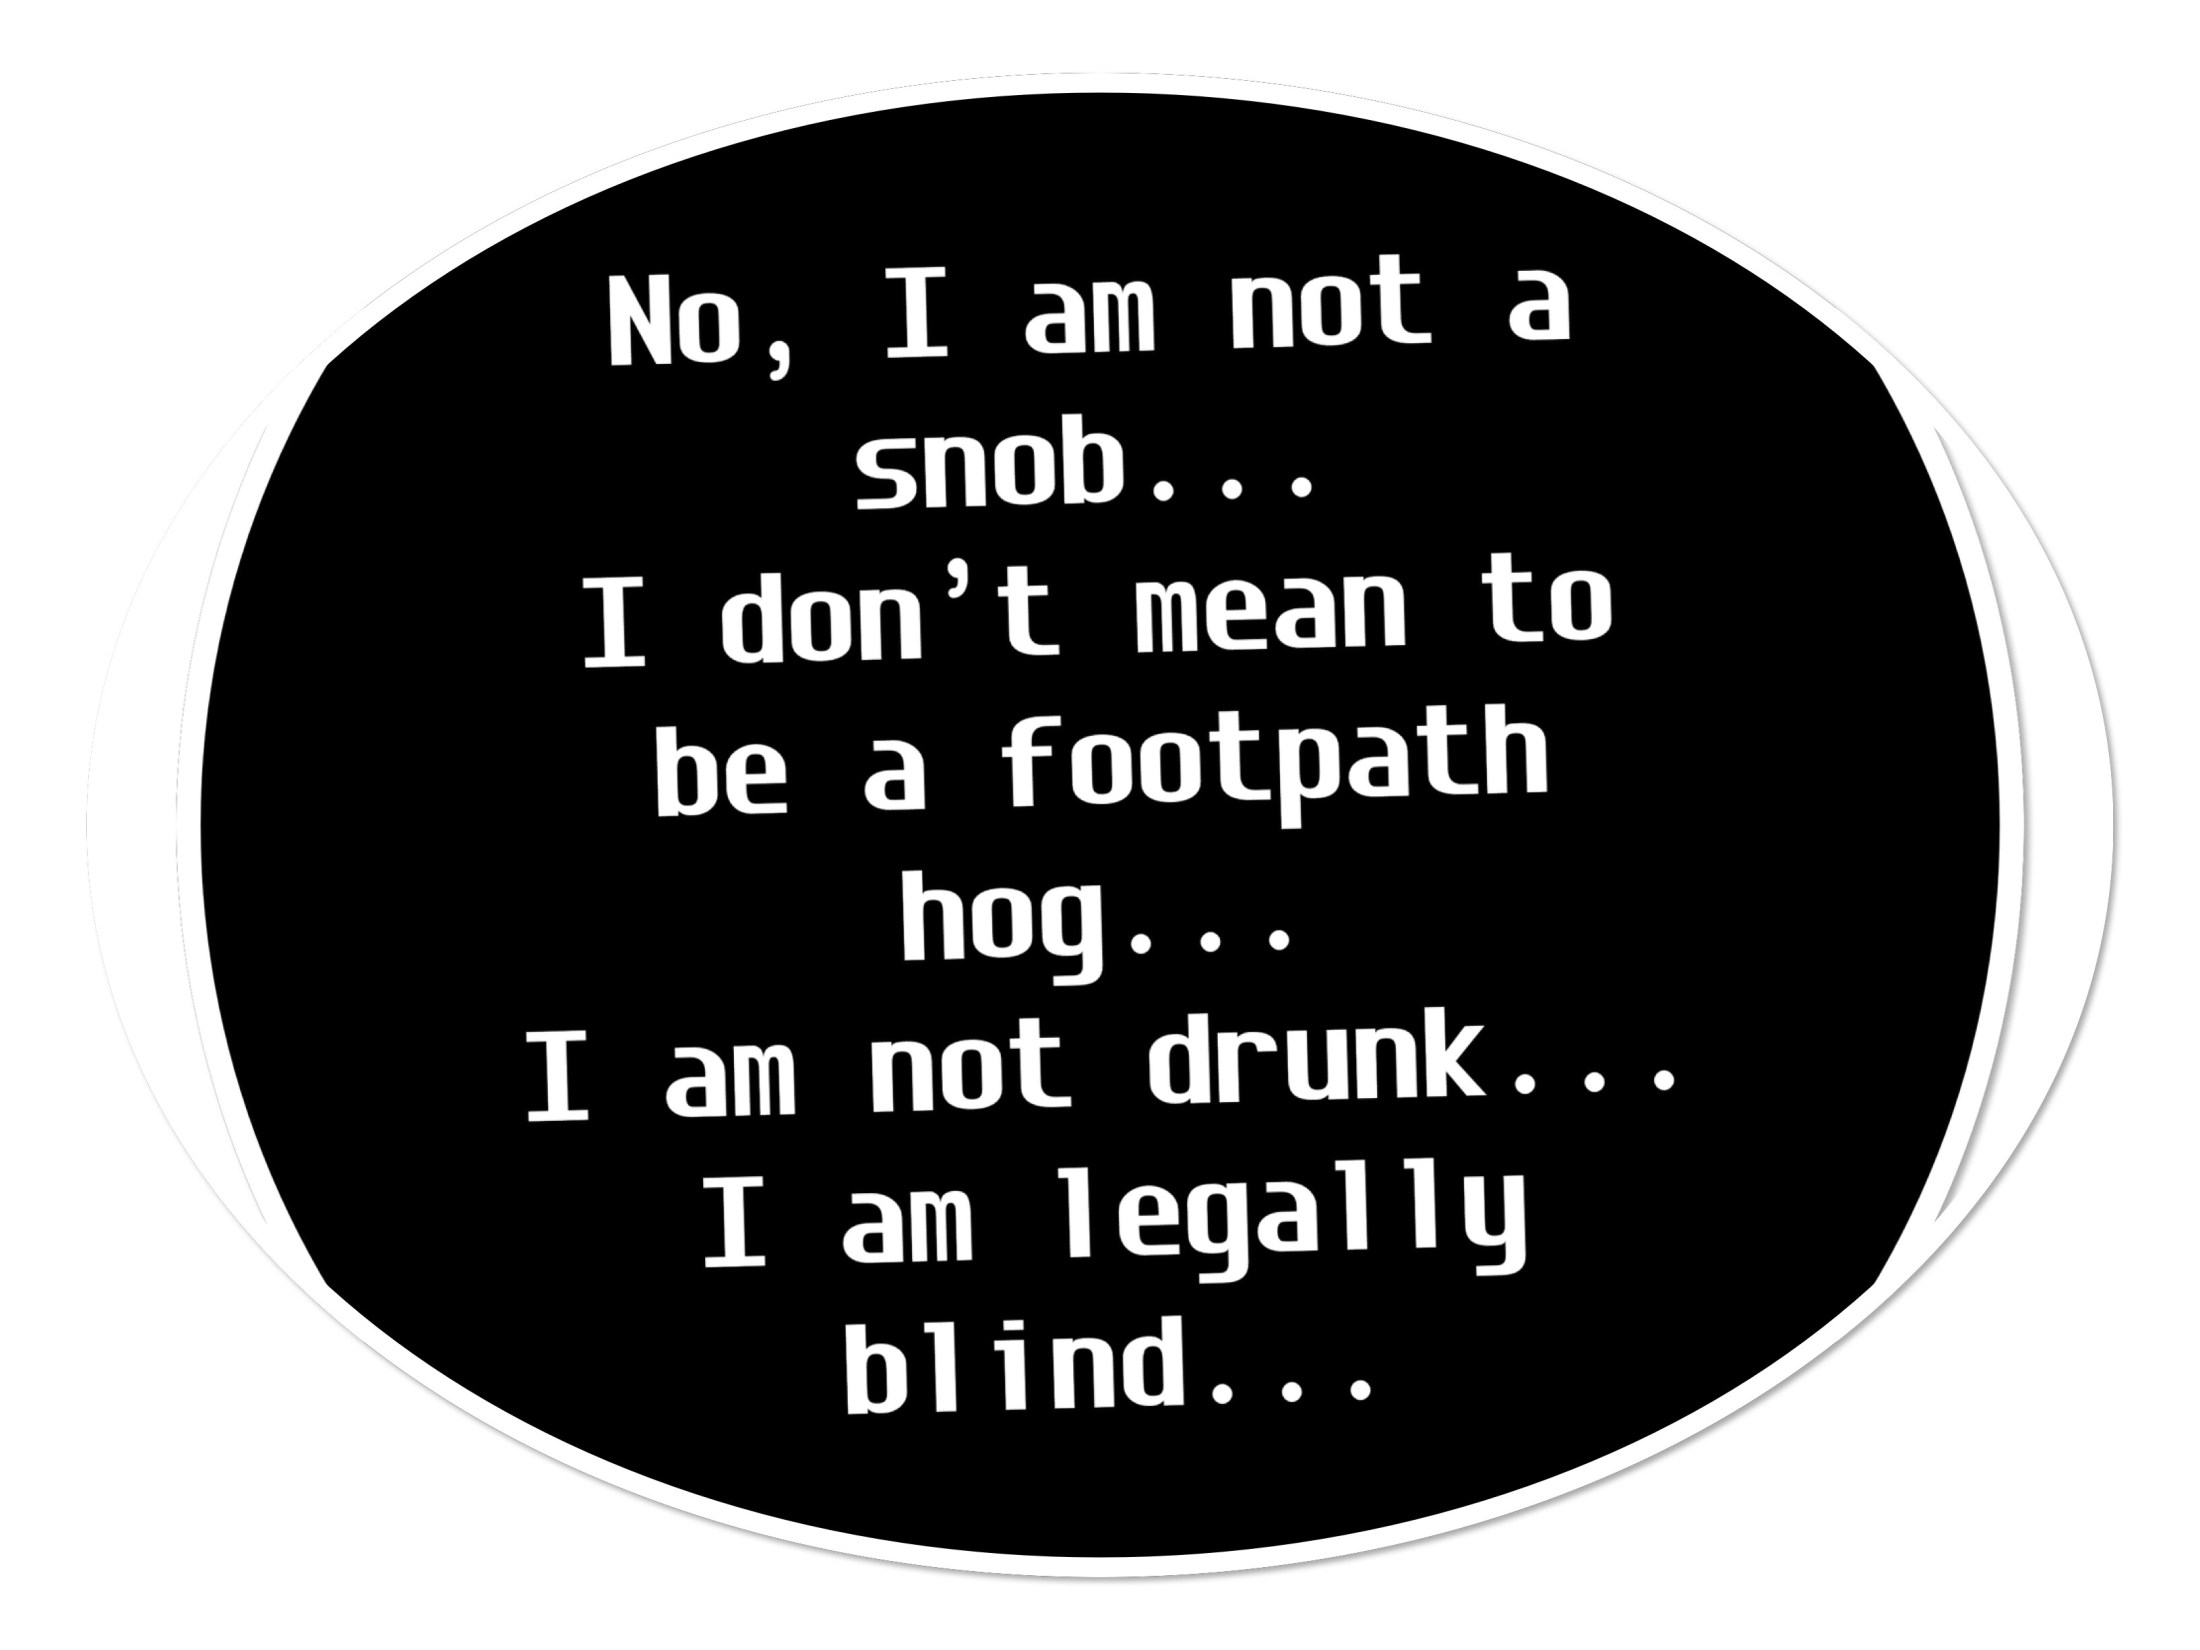 Text reading: No, I am not a snob. I am not a footpath hog. I am not drunk. I am legally blind